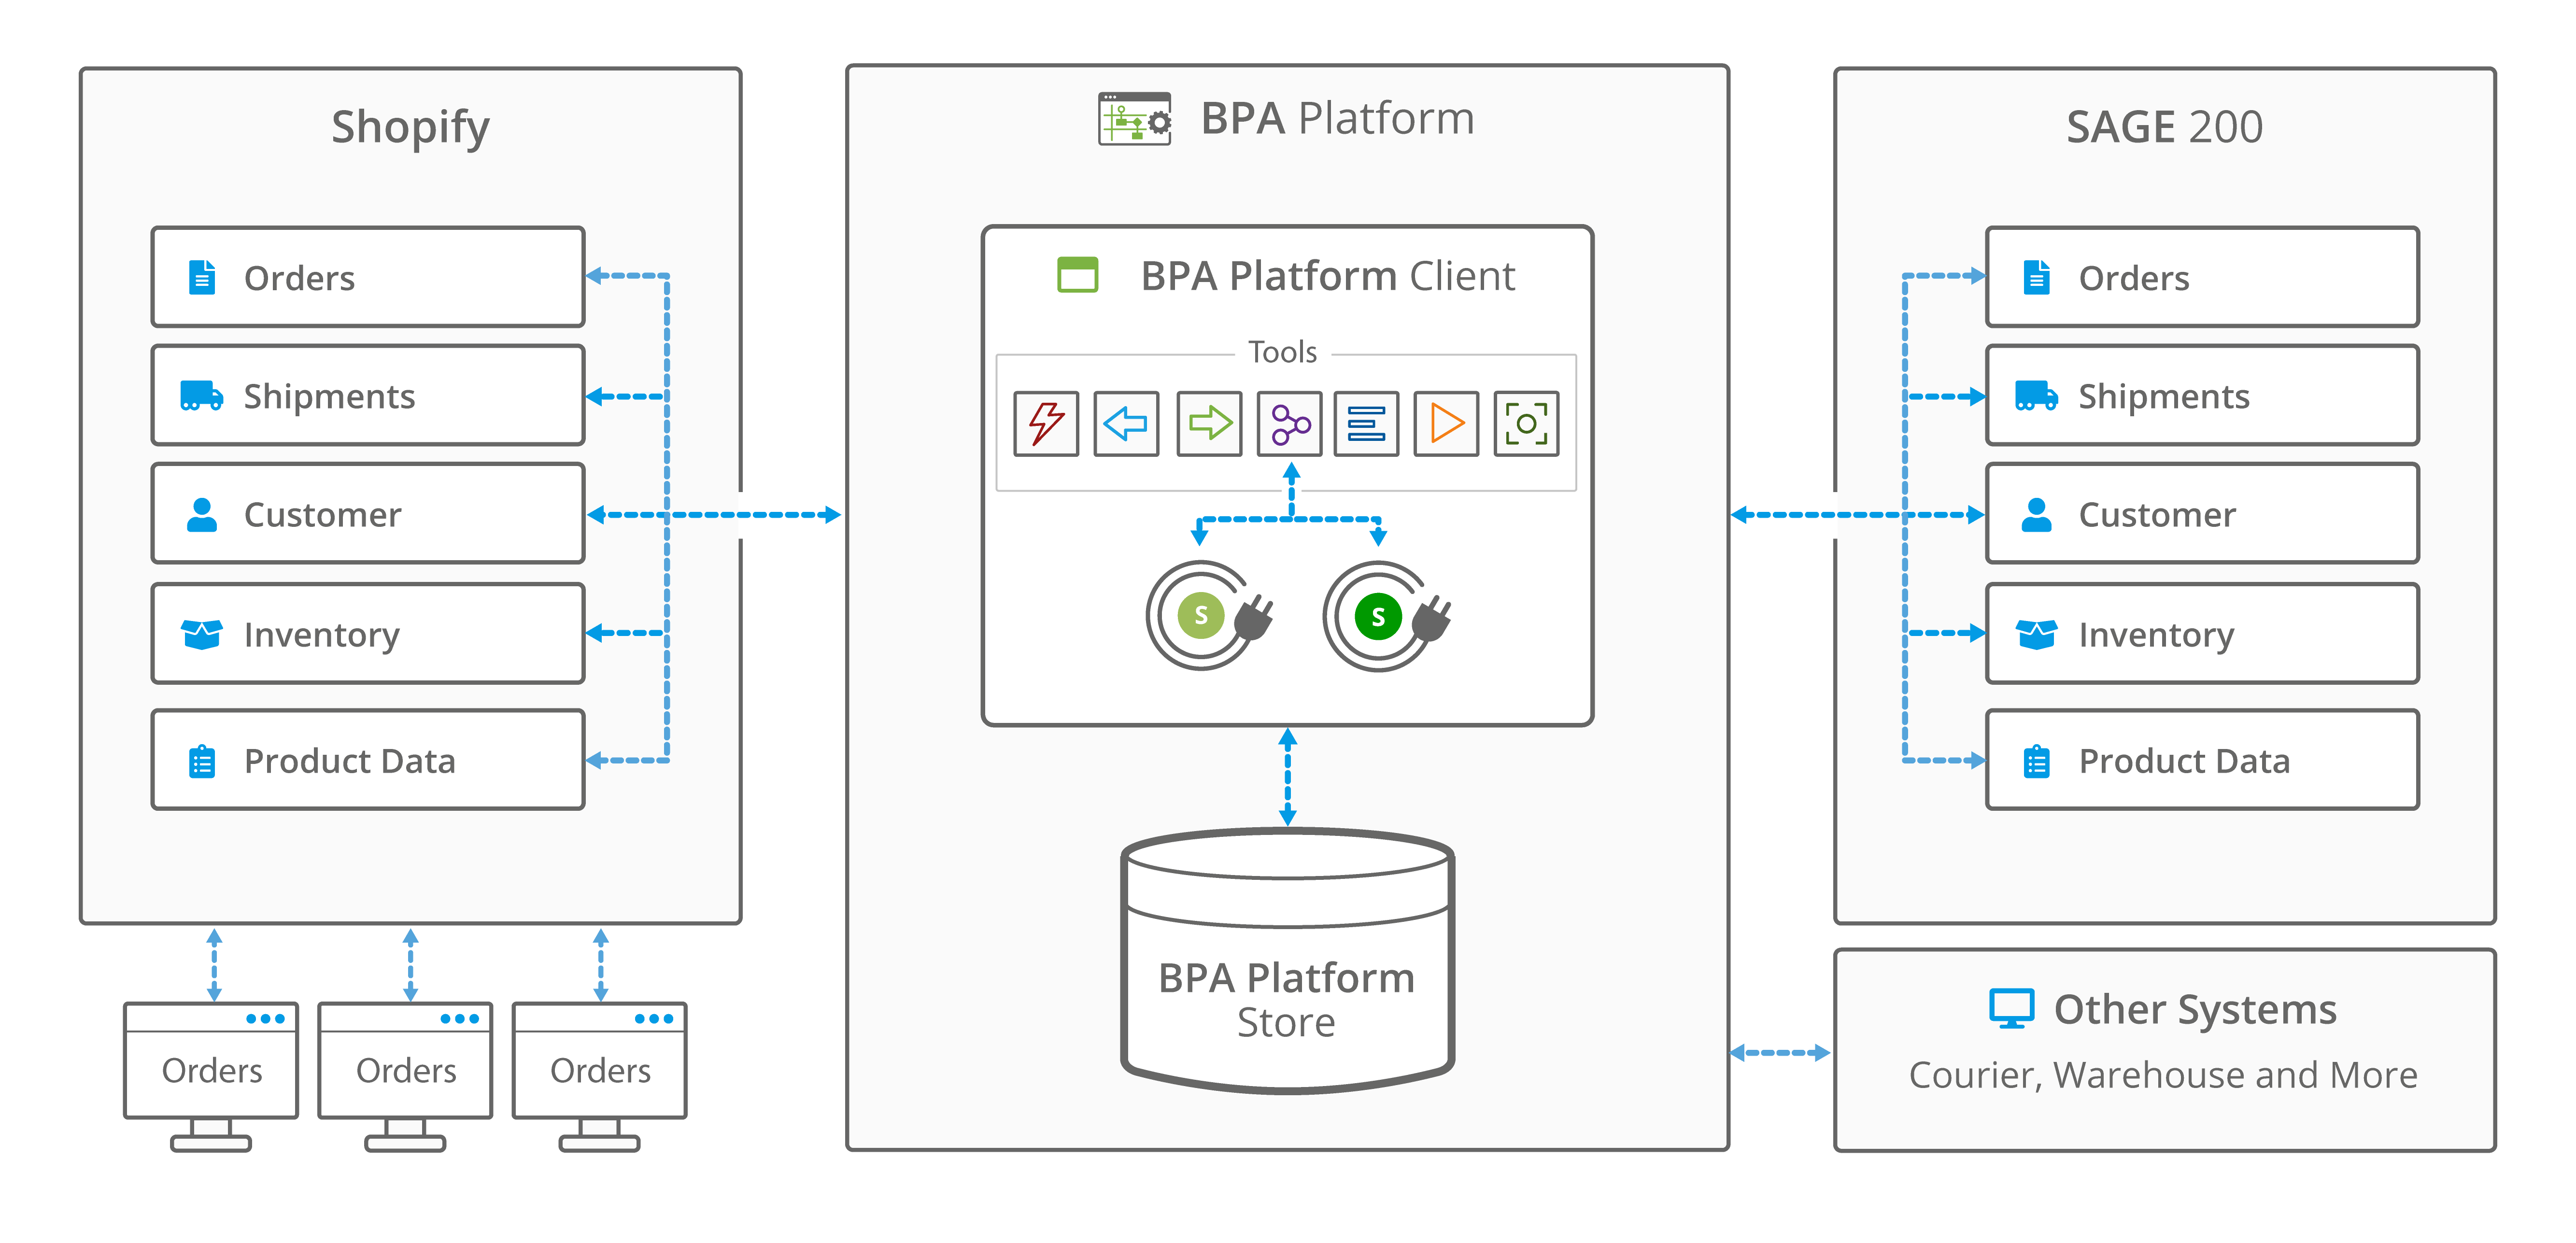 Shopify and Sage 200 integration architecture - BPA Platform